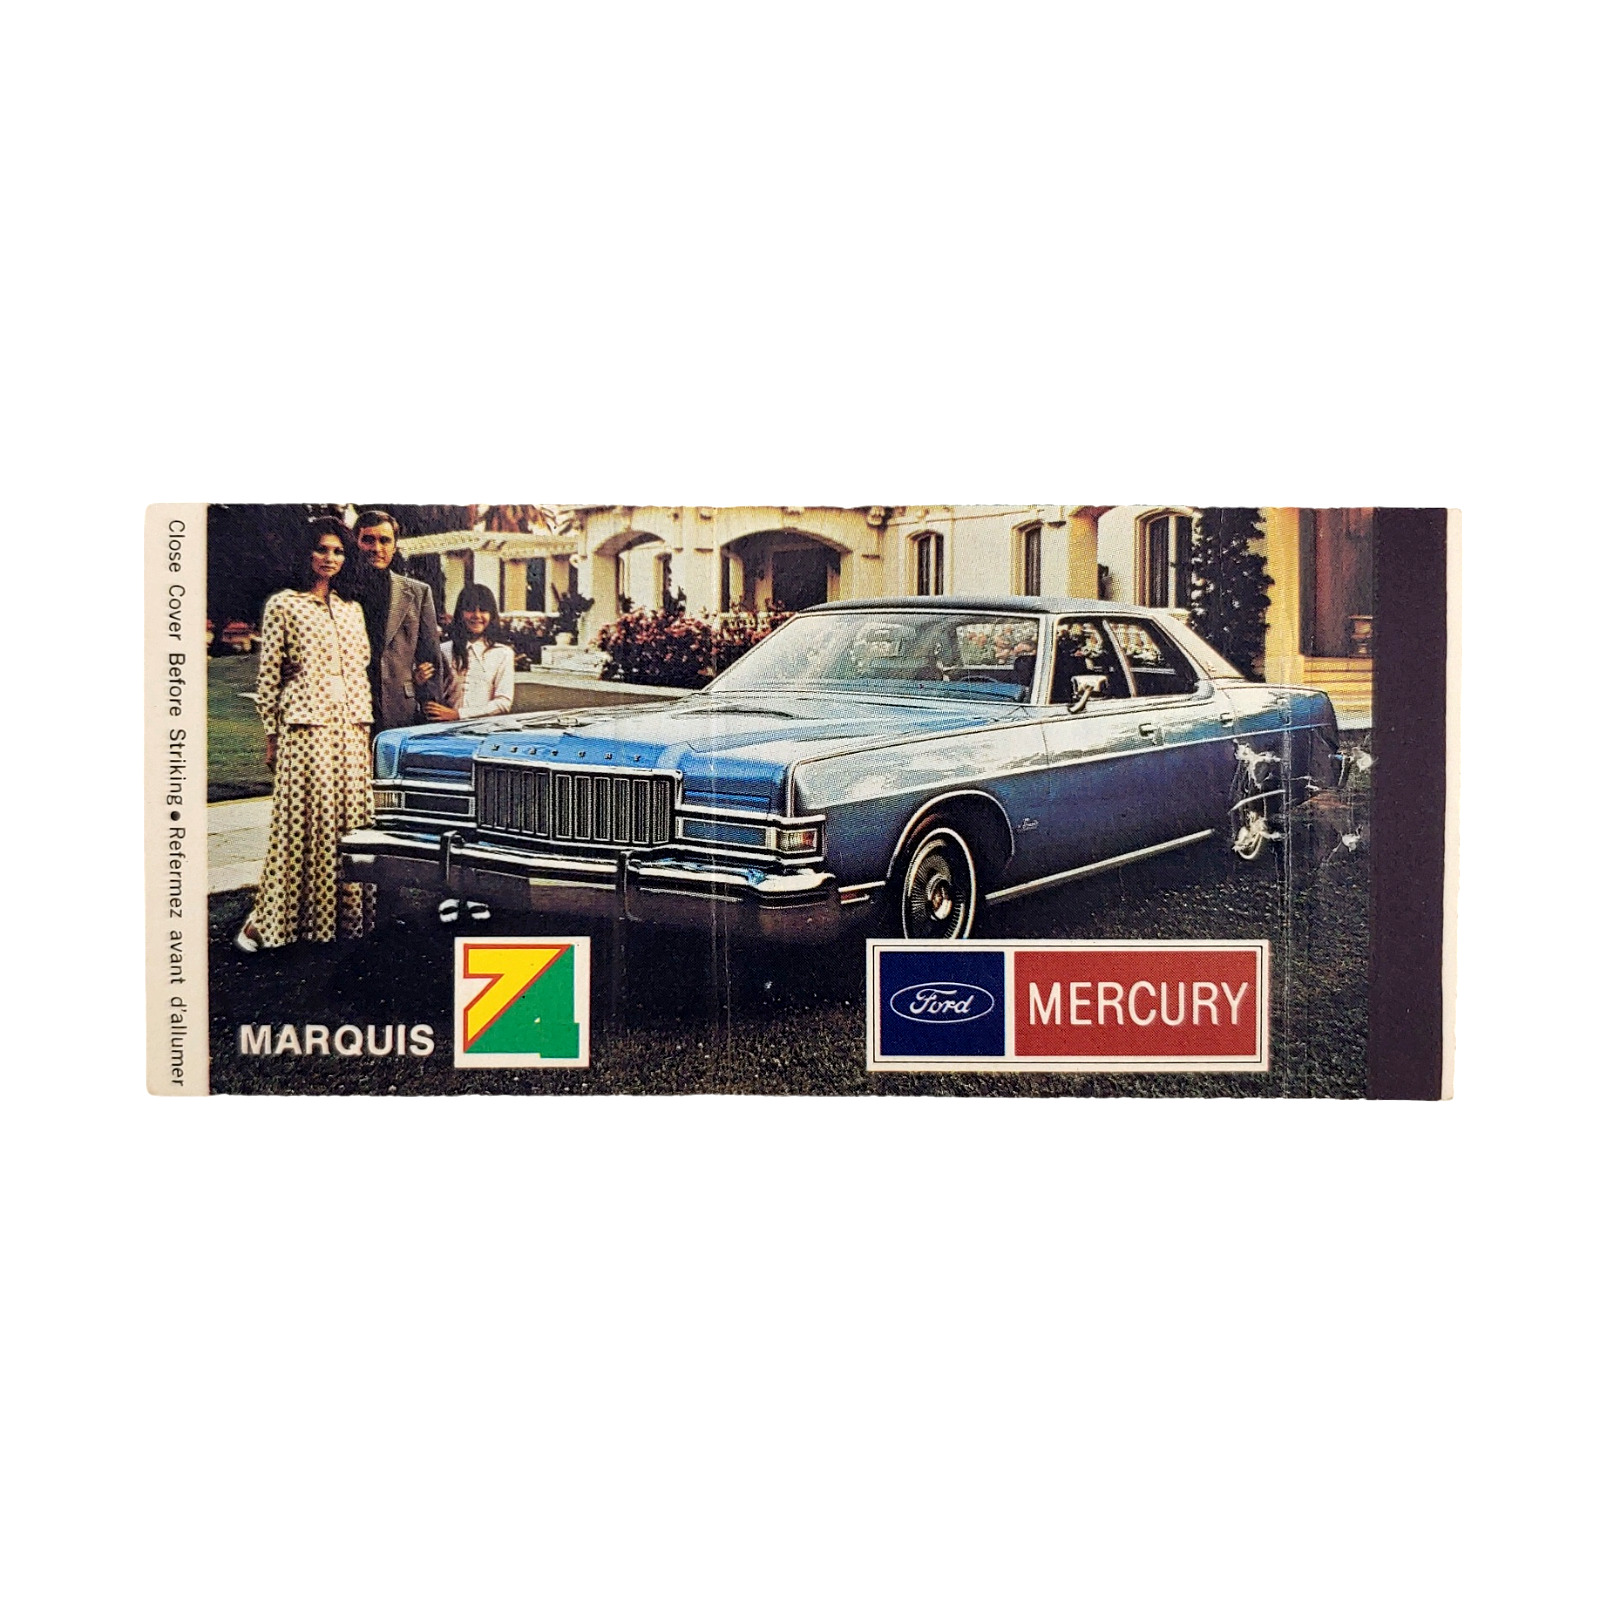 Vintage Matchbook Cover 1974 Mercury Marquis- Jack Hay Motors Limited